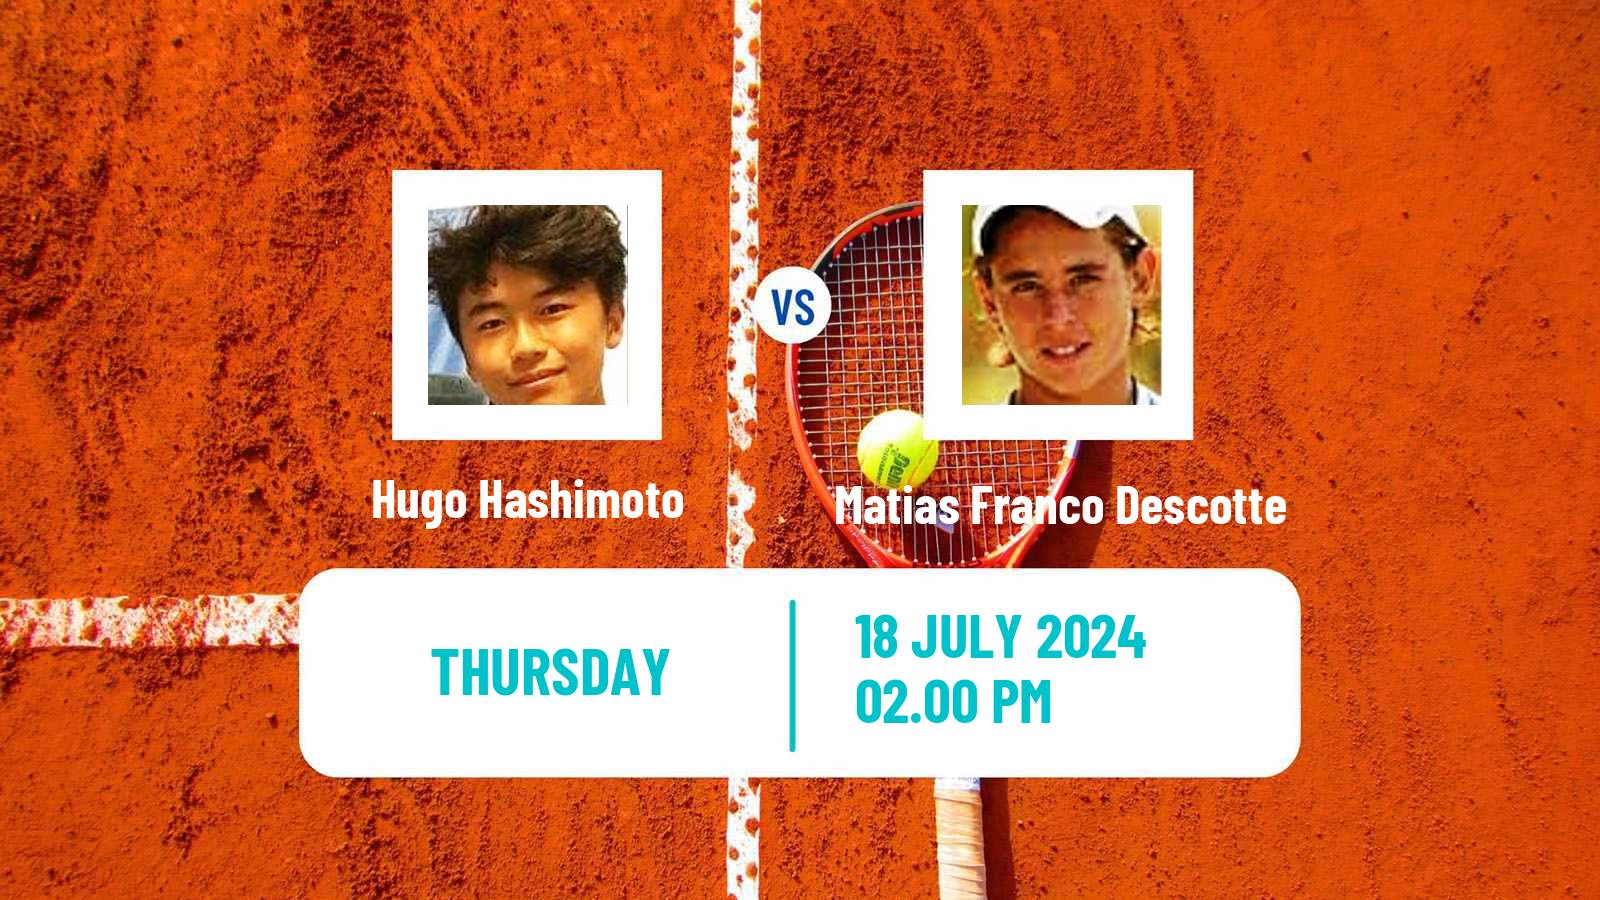 Tennis ITF M15 Rochester Ny Men Hugo Hashimoto - Matias Franco Descotte